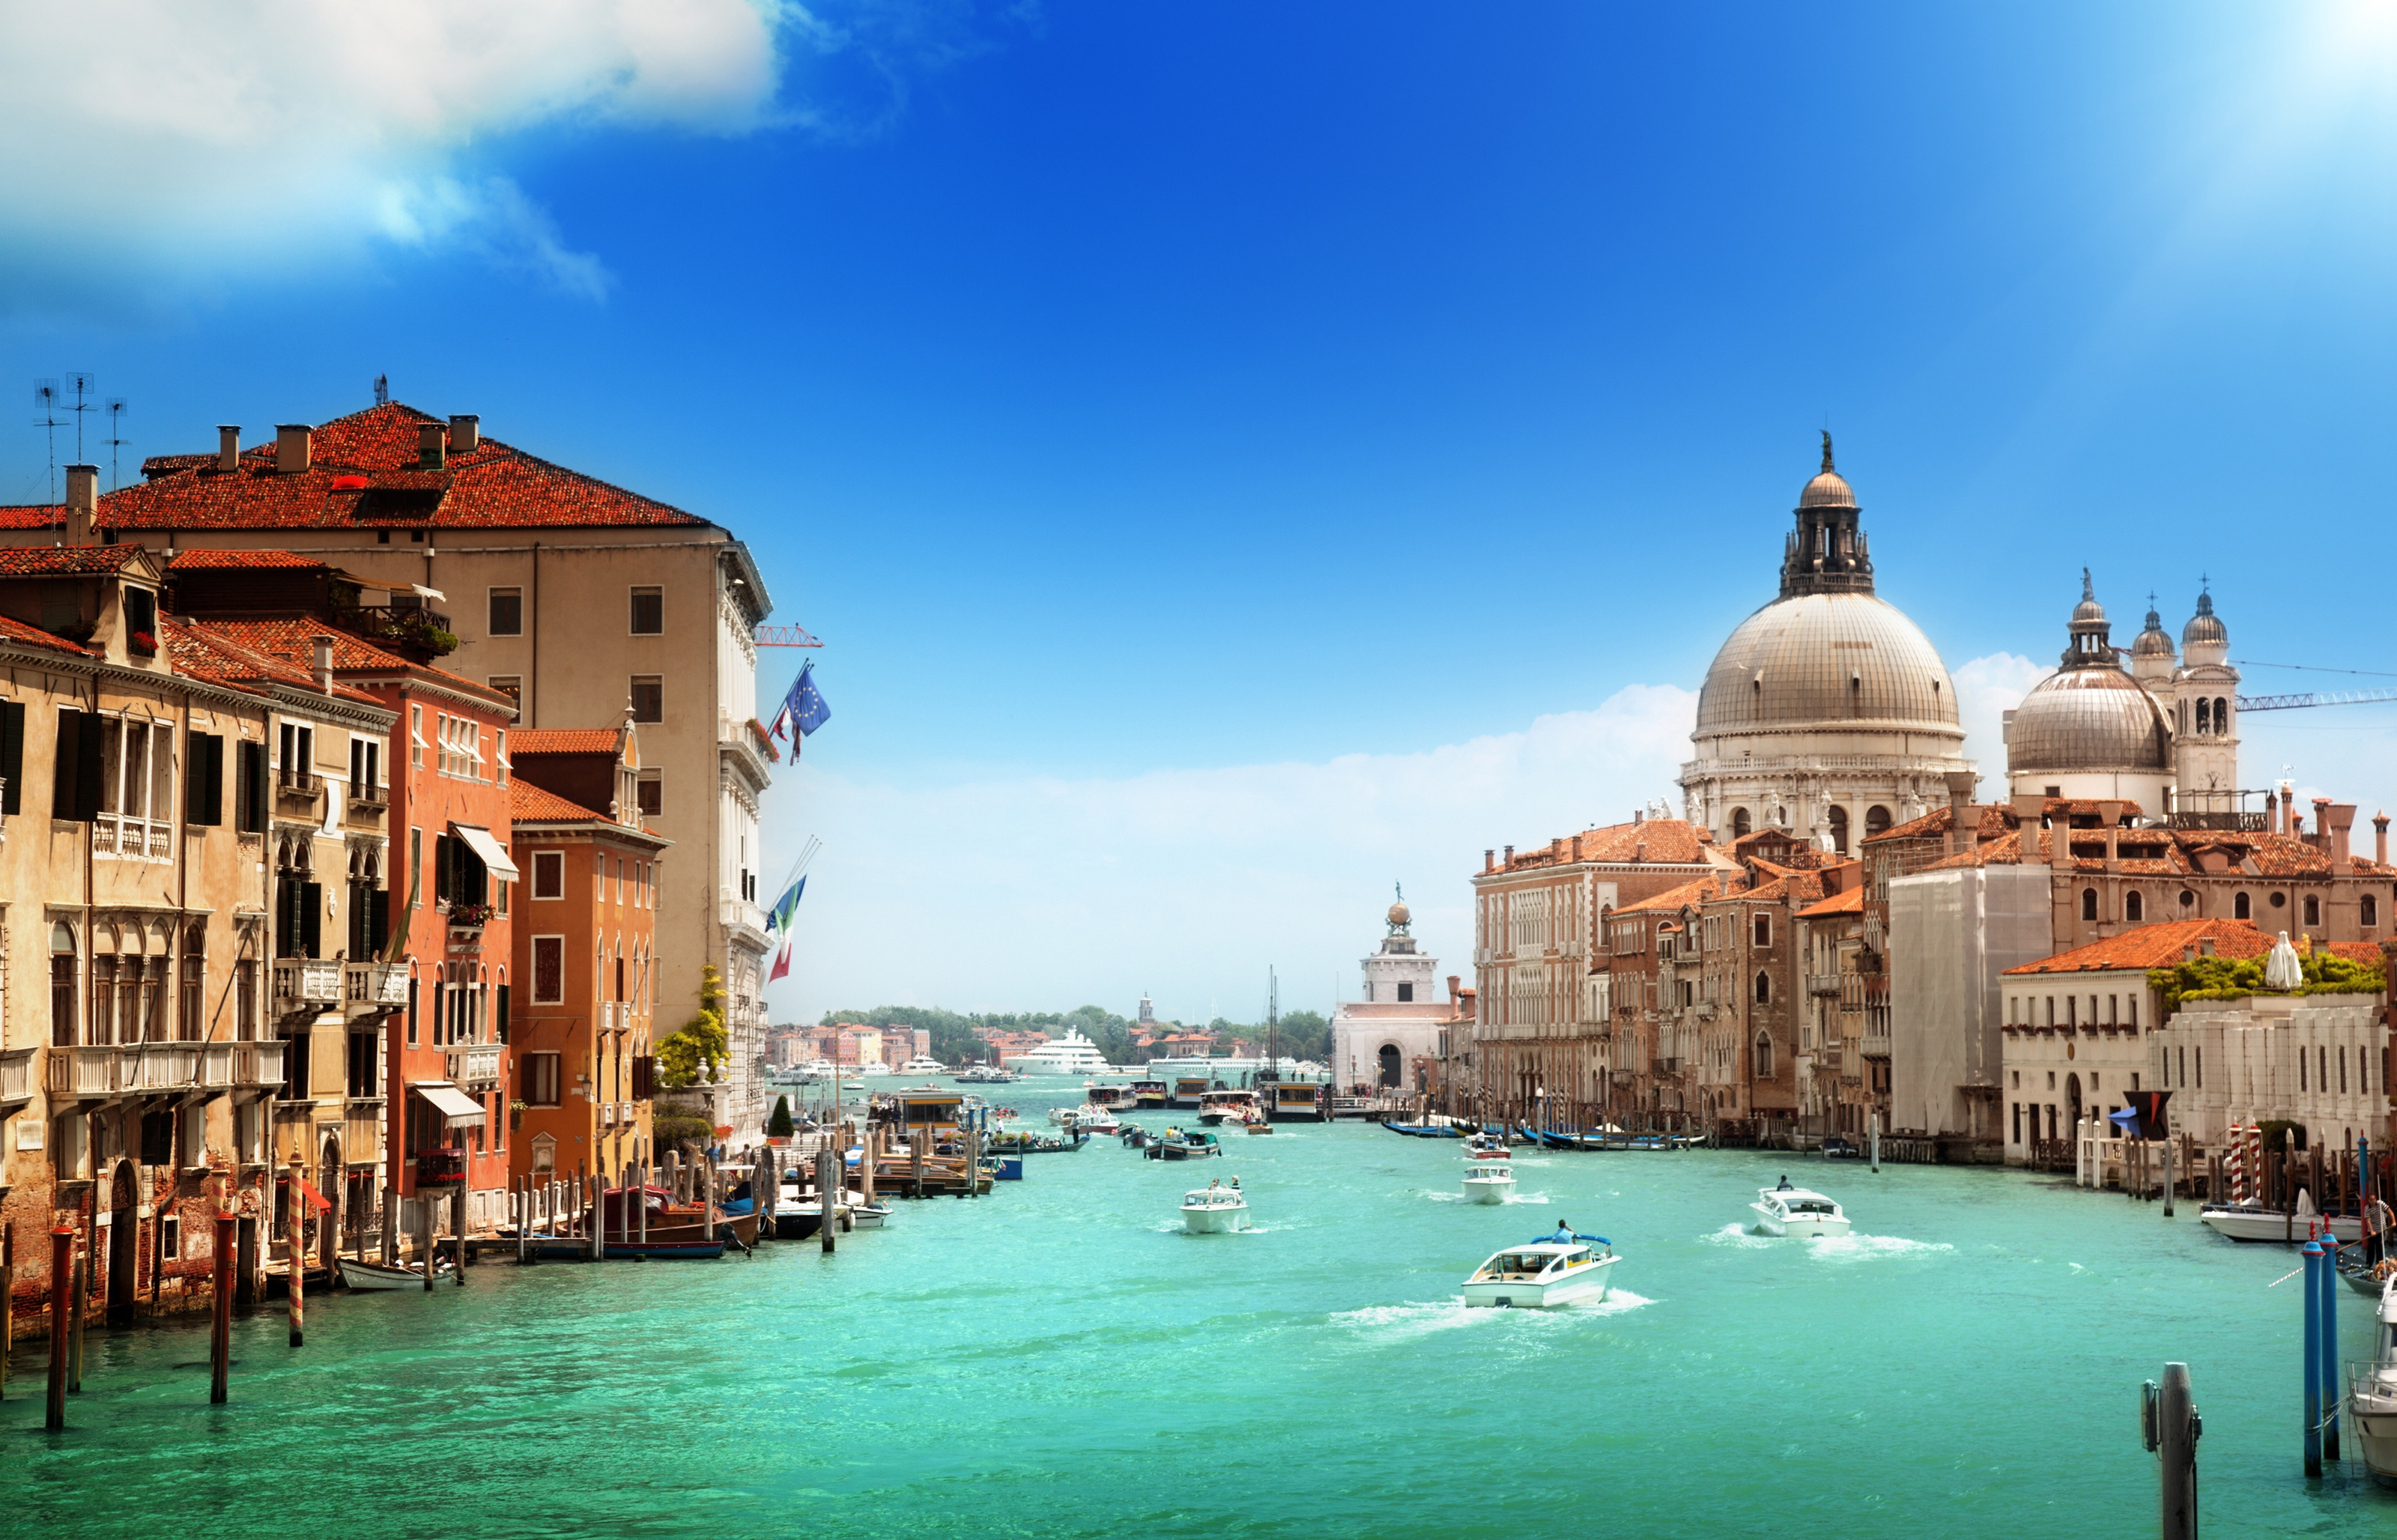 The Grand Canal and Basilica Santa Maria della Salute, Venice, Italy Mural  - Murals Your Way